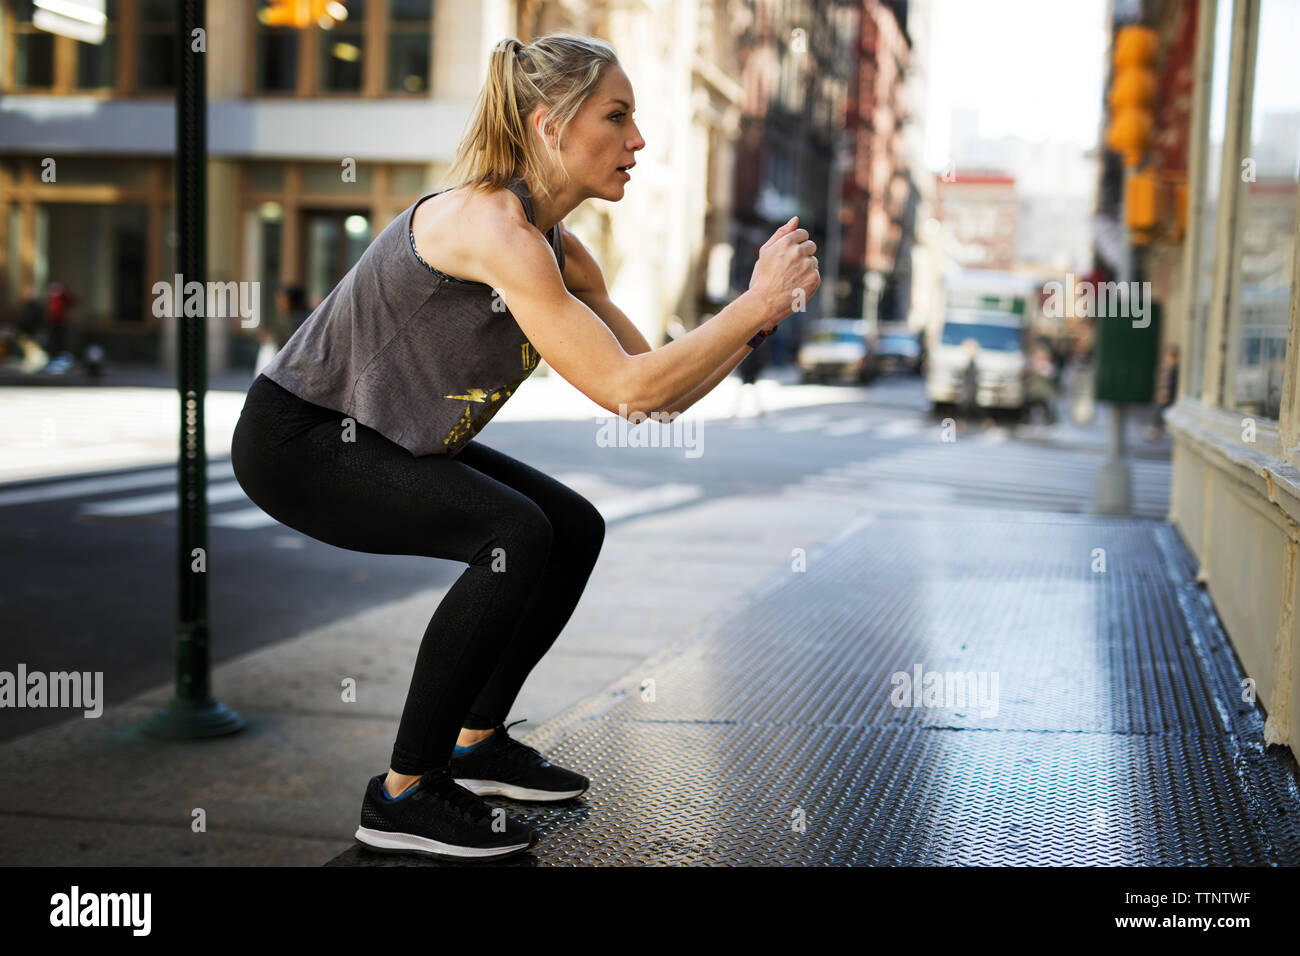 Confident athlete exercising at sidewalk in city Stock Photo